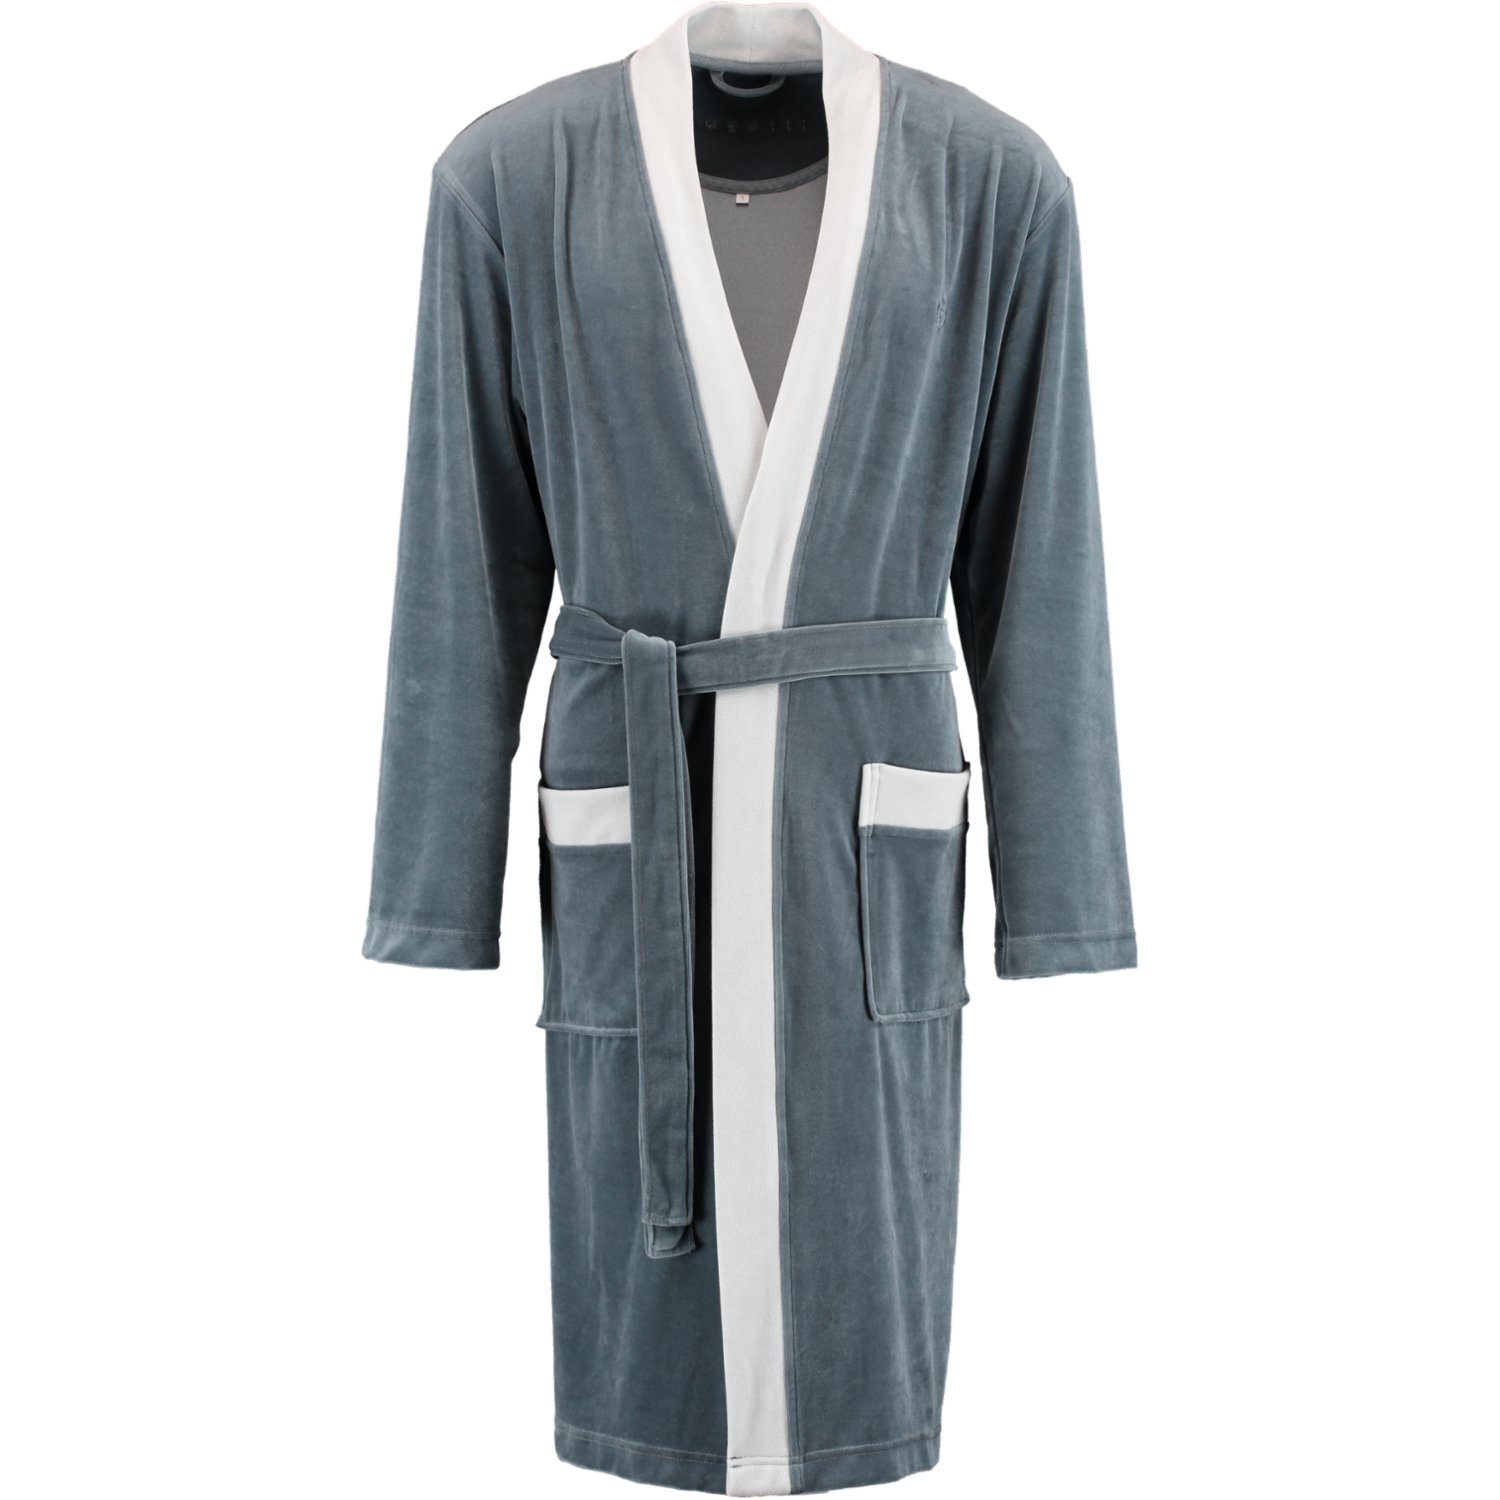 bugatti Herrenbademantel Tommaso Kimono Nikivelours, Kimono, 80% Baumwolle, 20% Polyester